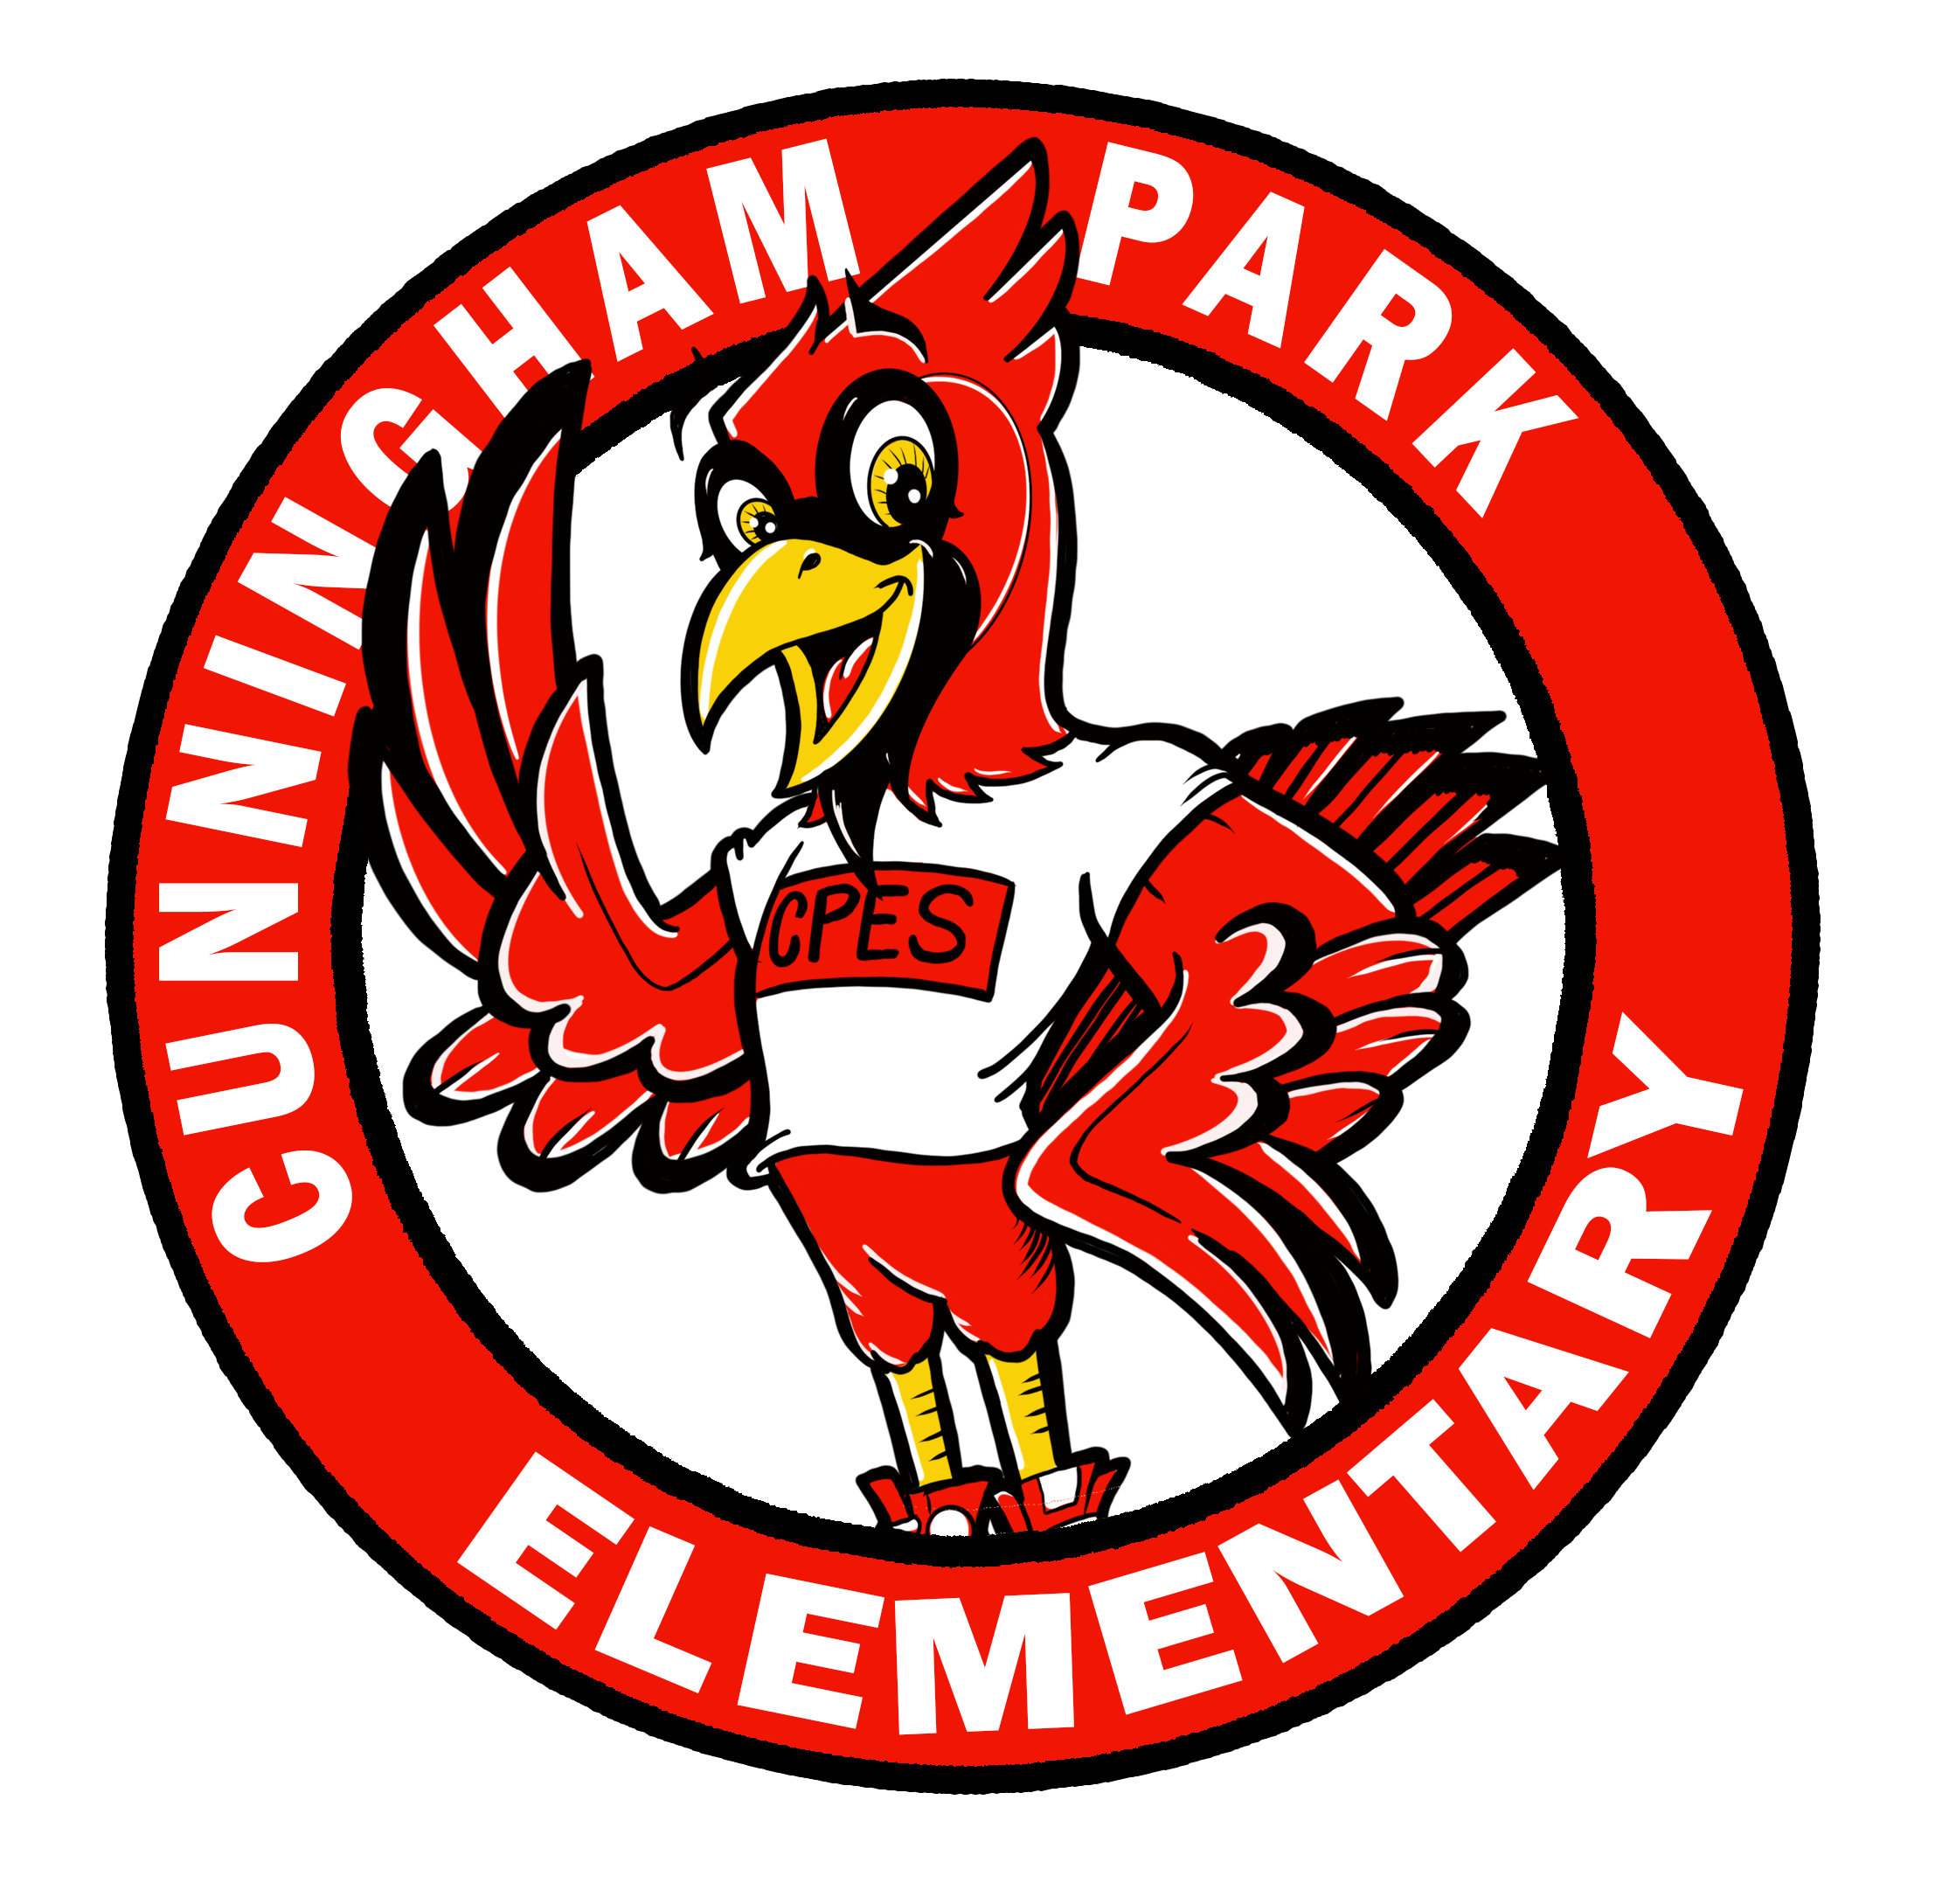 Cunningham Park Elementary School logo